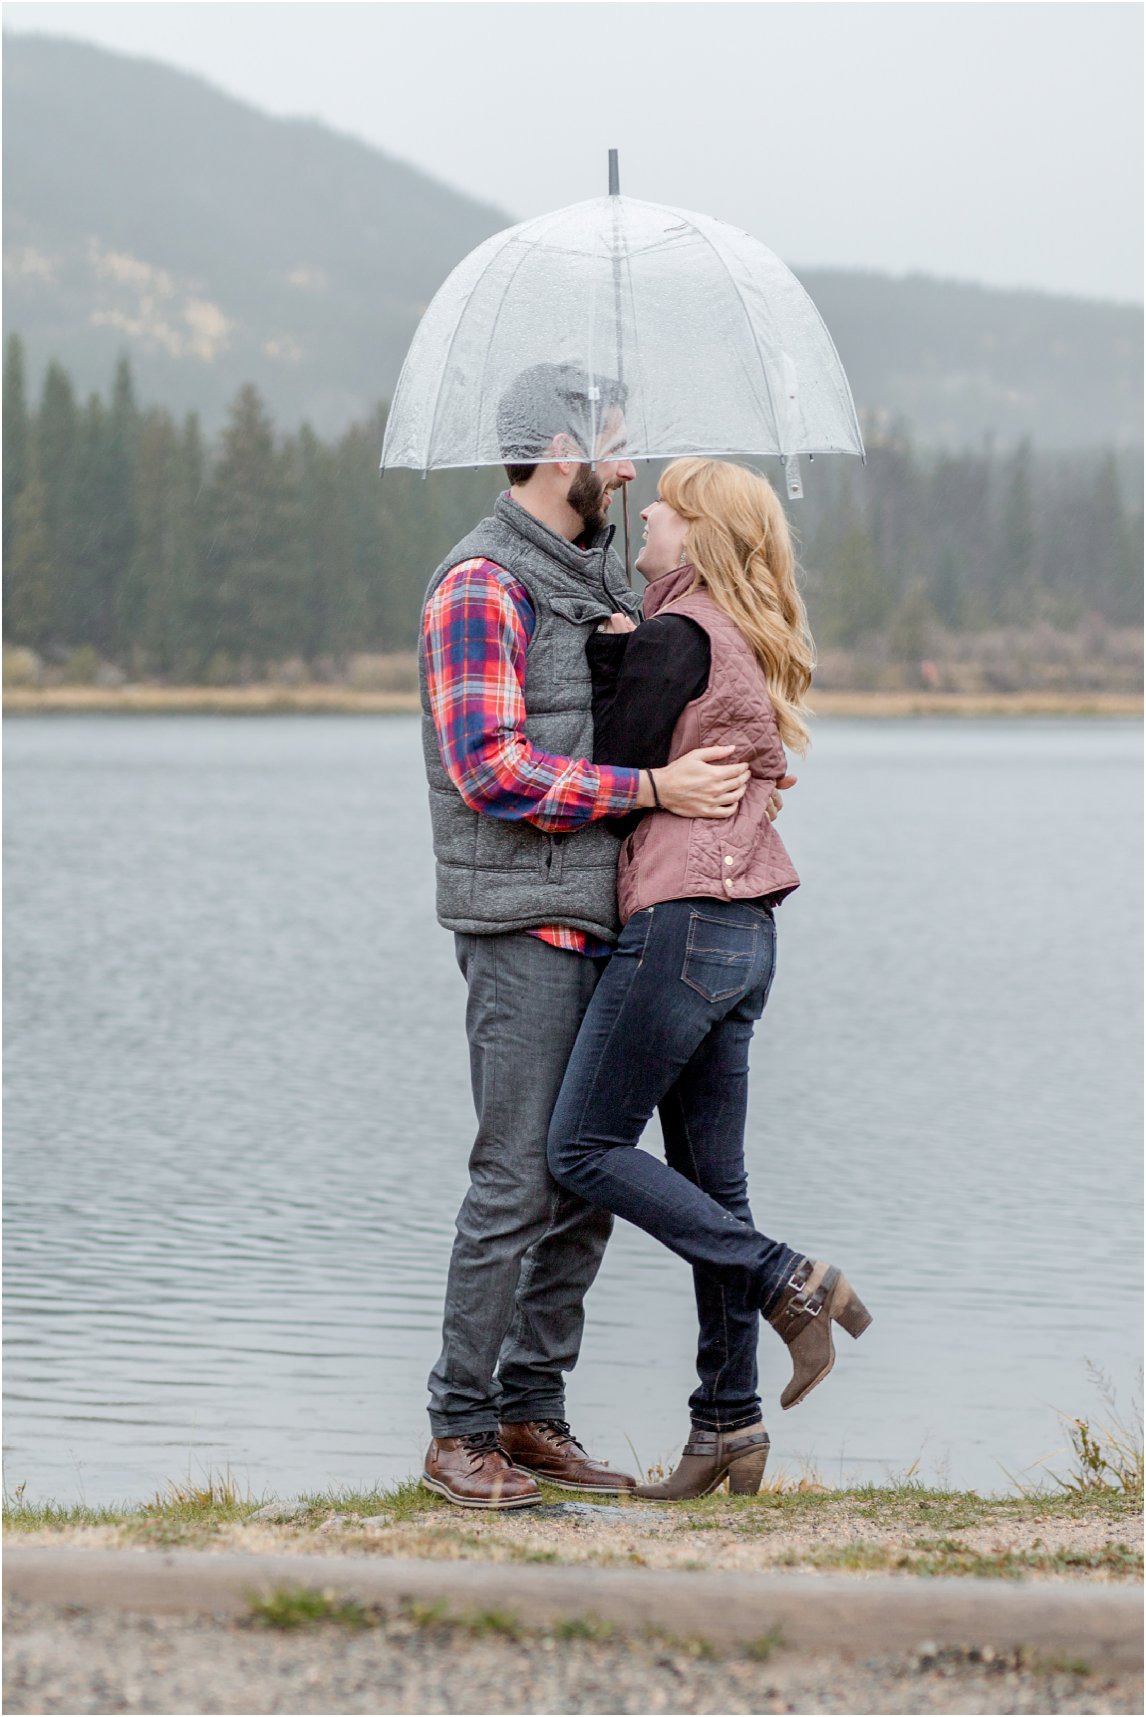 Rocky Mountain National Park Engagement Session by Estes Park, Colorado Wedding Photographer